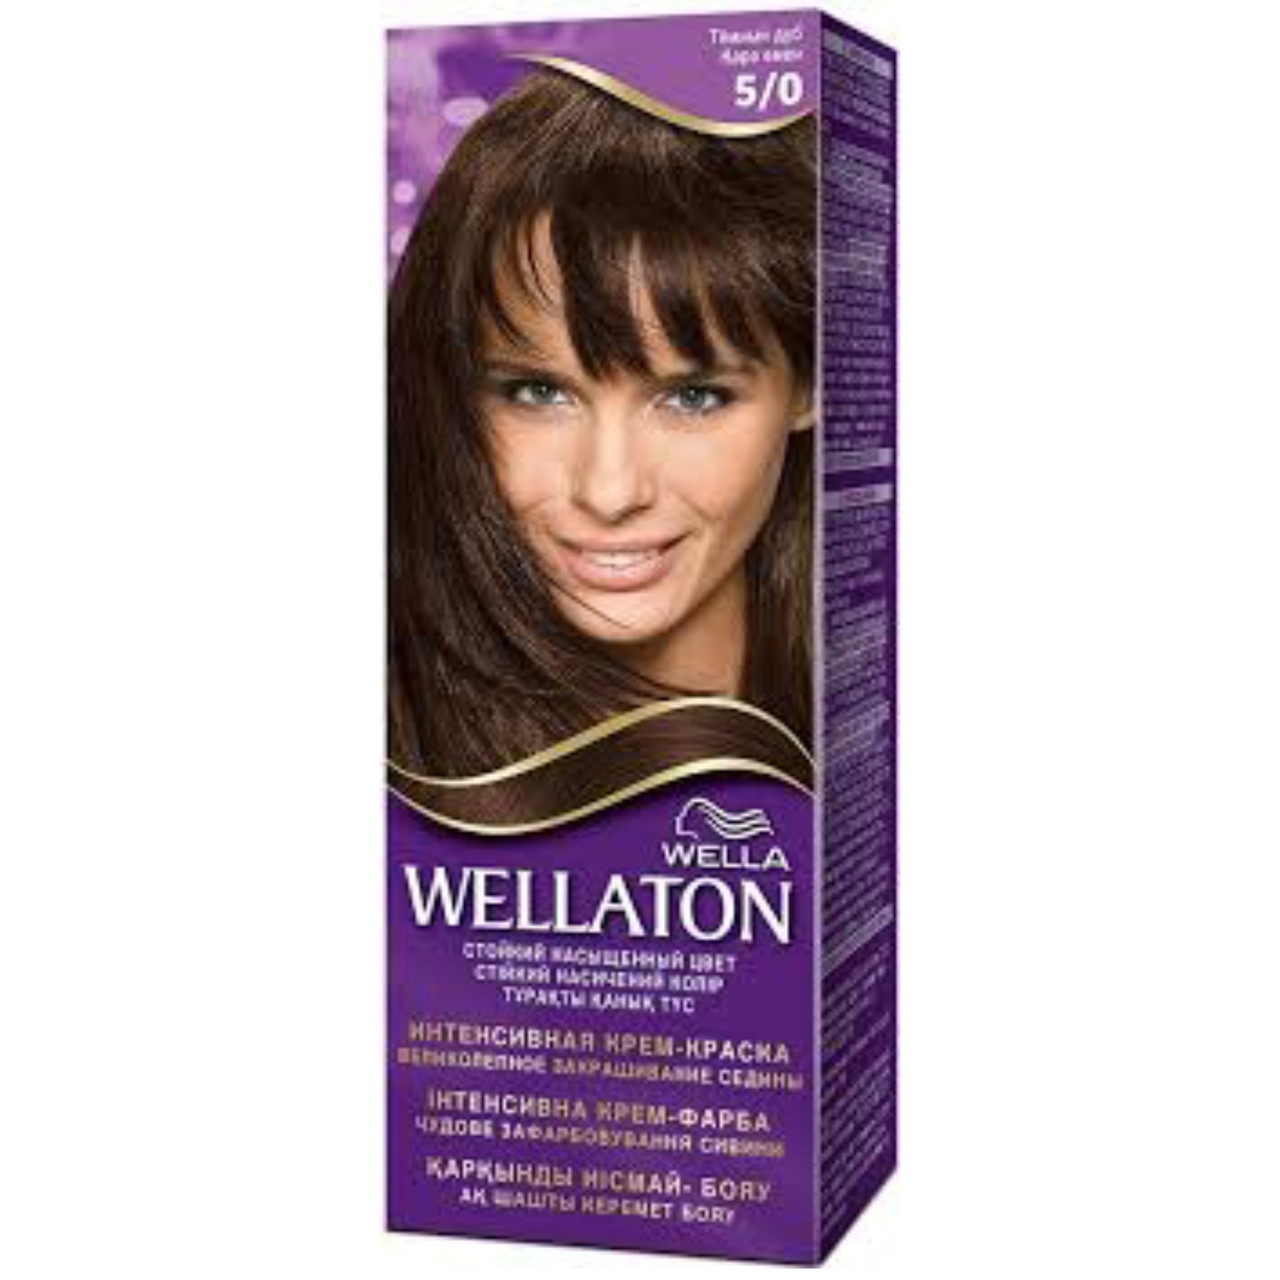 Kраска для волос Wella Wellaton Maxi Single Темный дуб 5/0 110мл